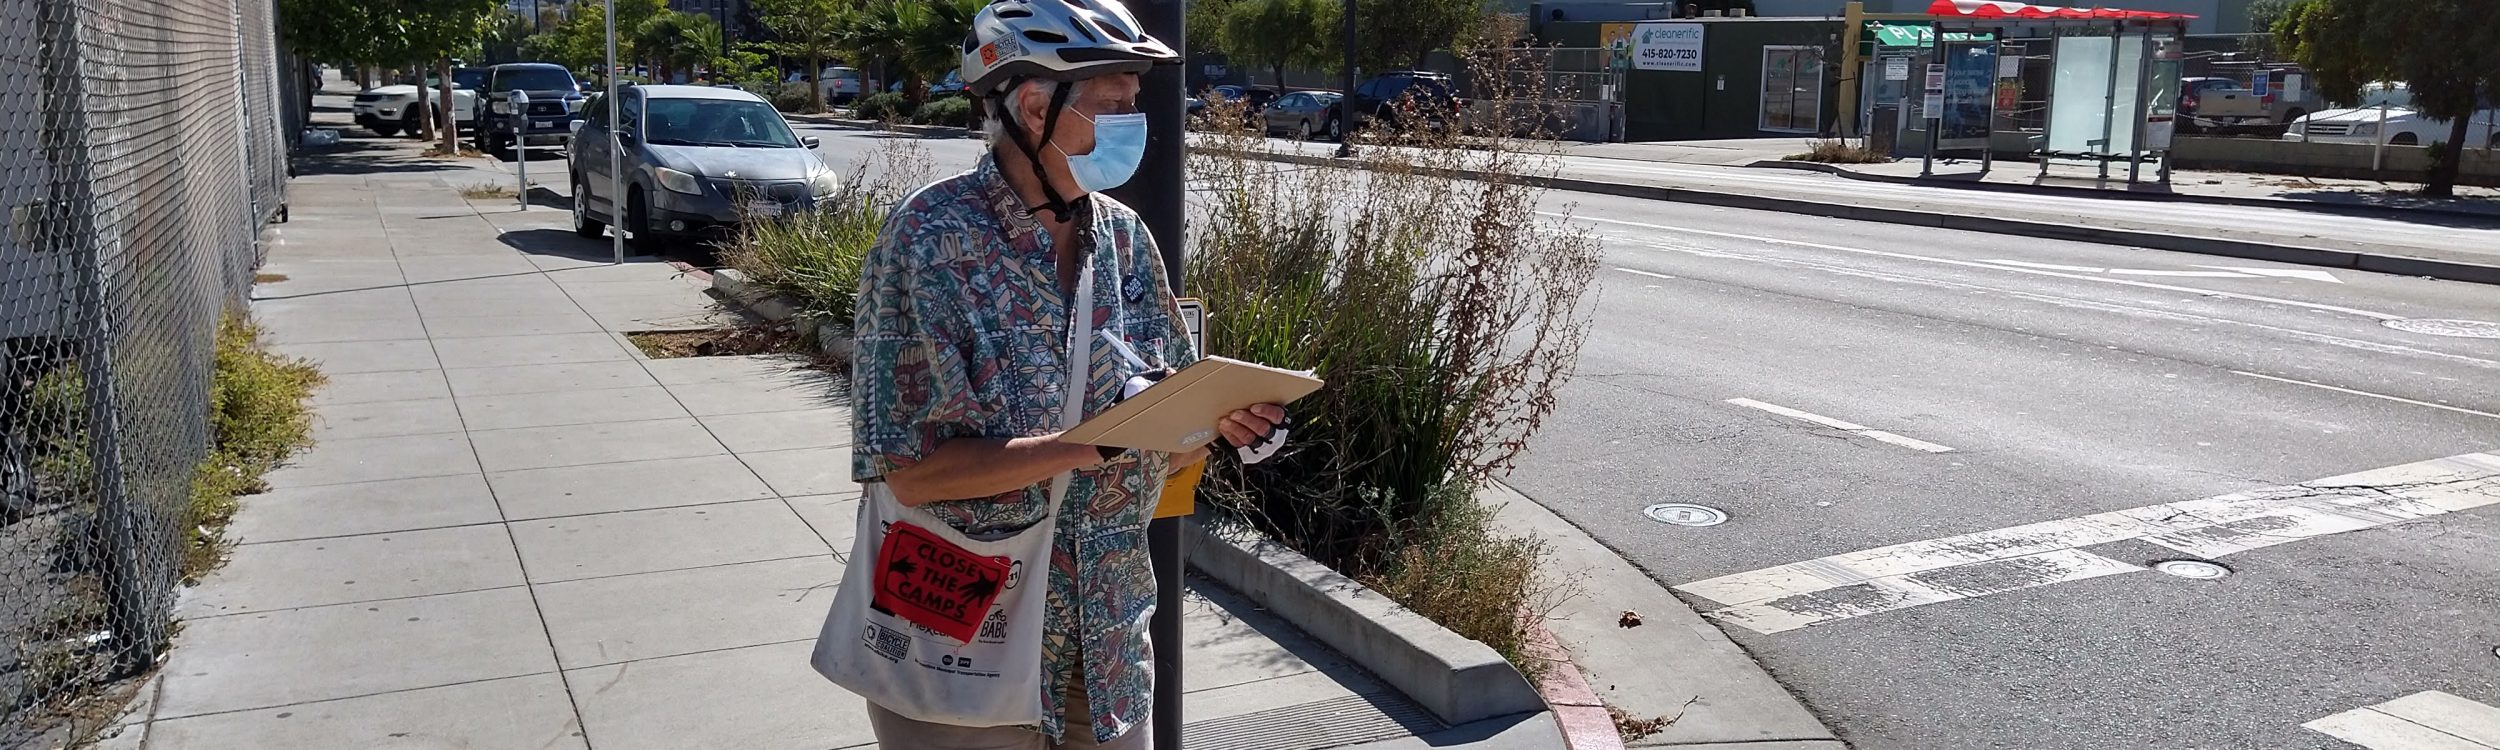 Volunteer conducting street survey